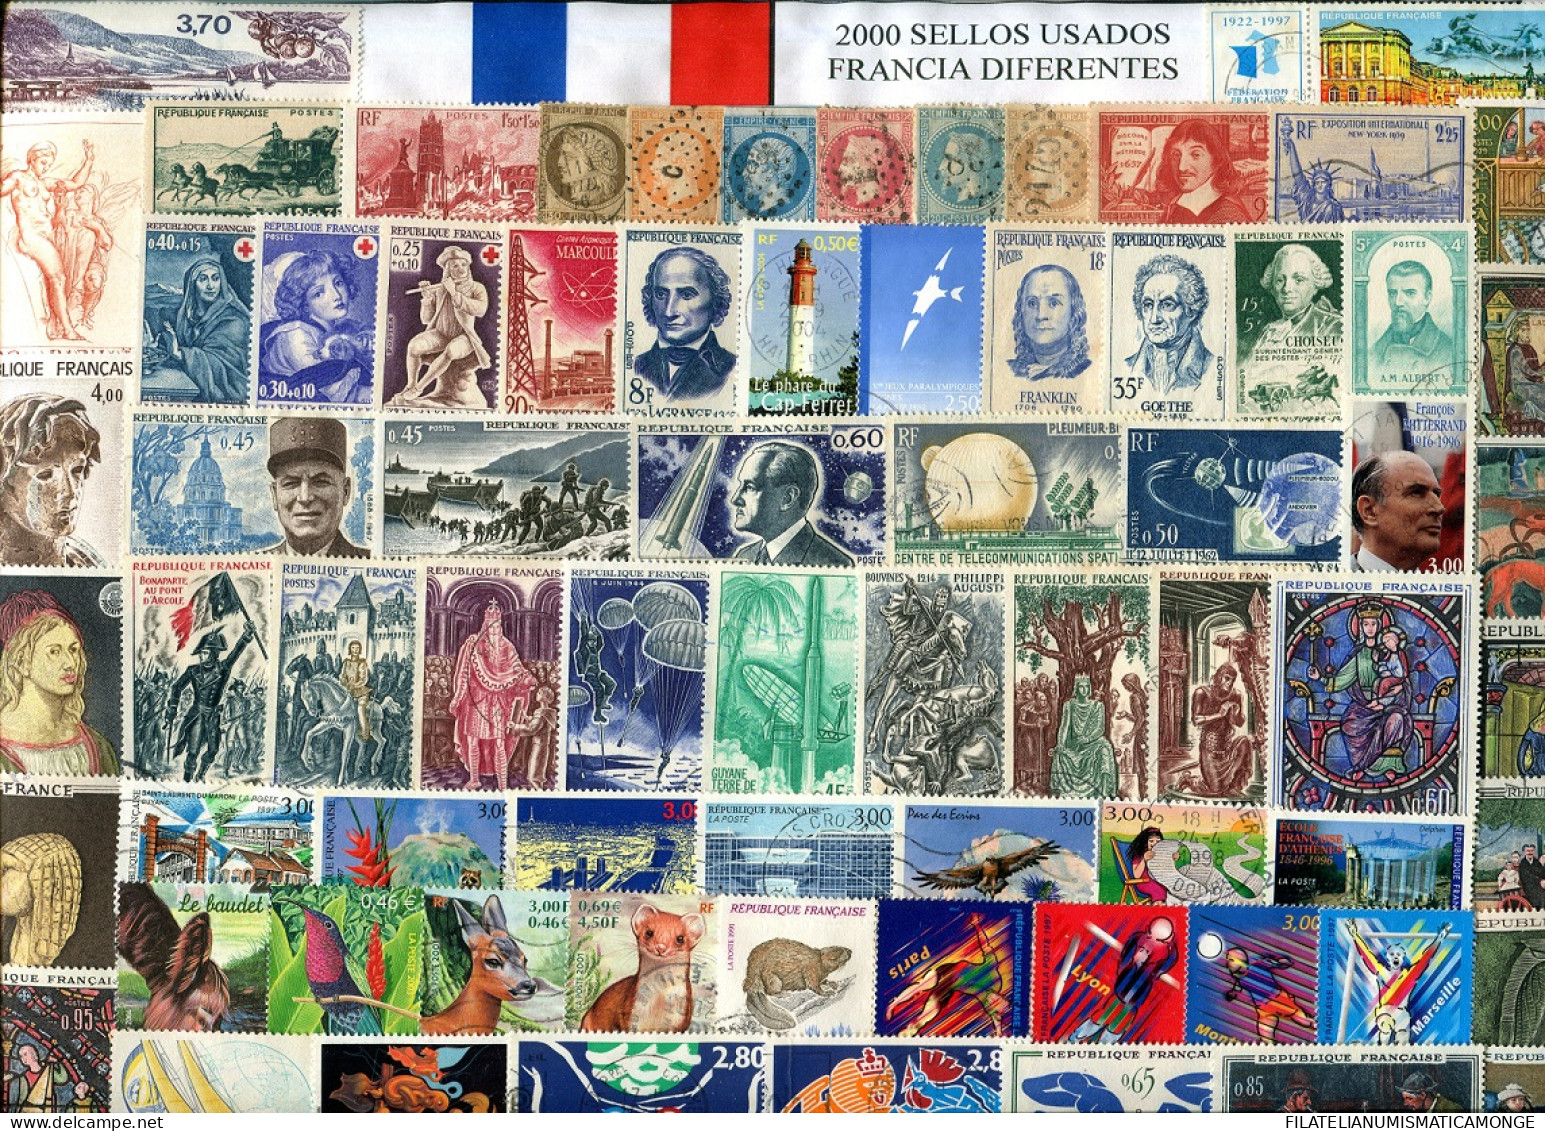  Offer - Lot Stamps - Paqueteria  Francia / Francia 2000 Diferentes / Elegante  - Lots & Kiloware (mixtures) - Min. 1000 Stamps